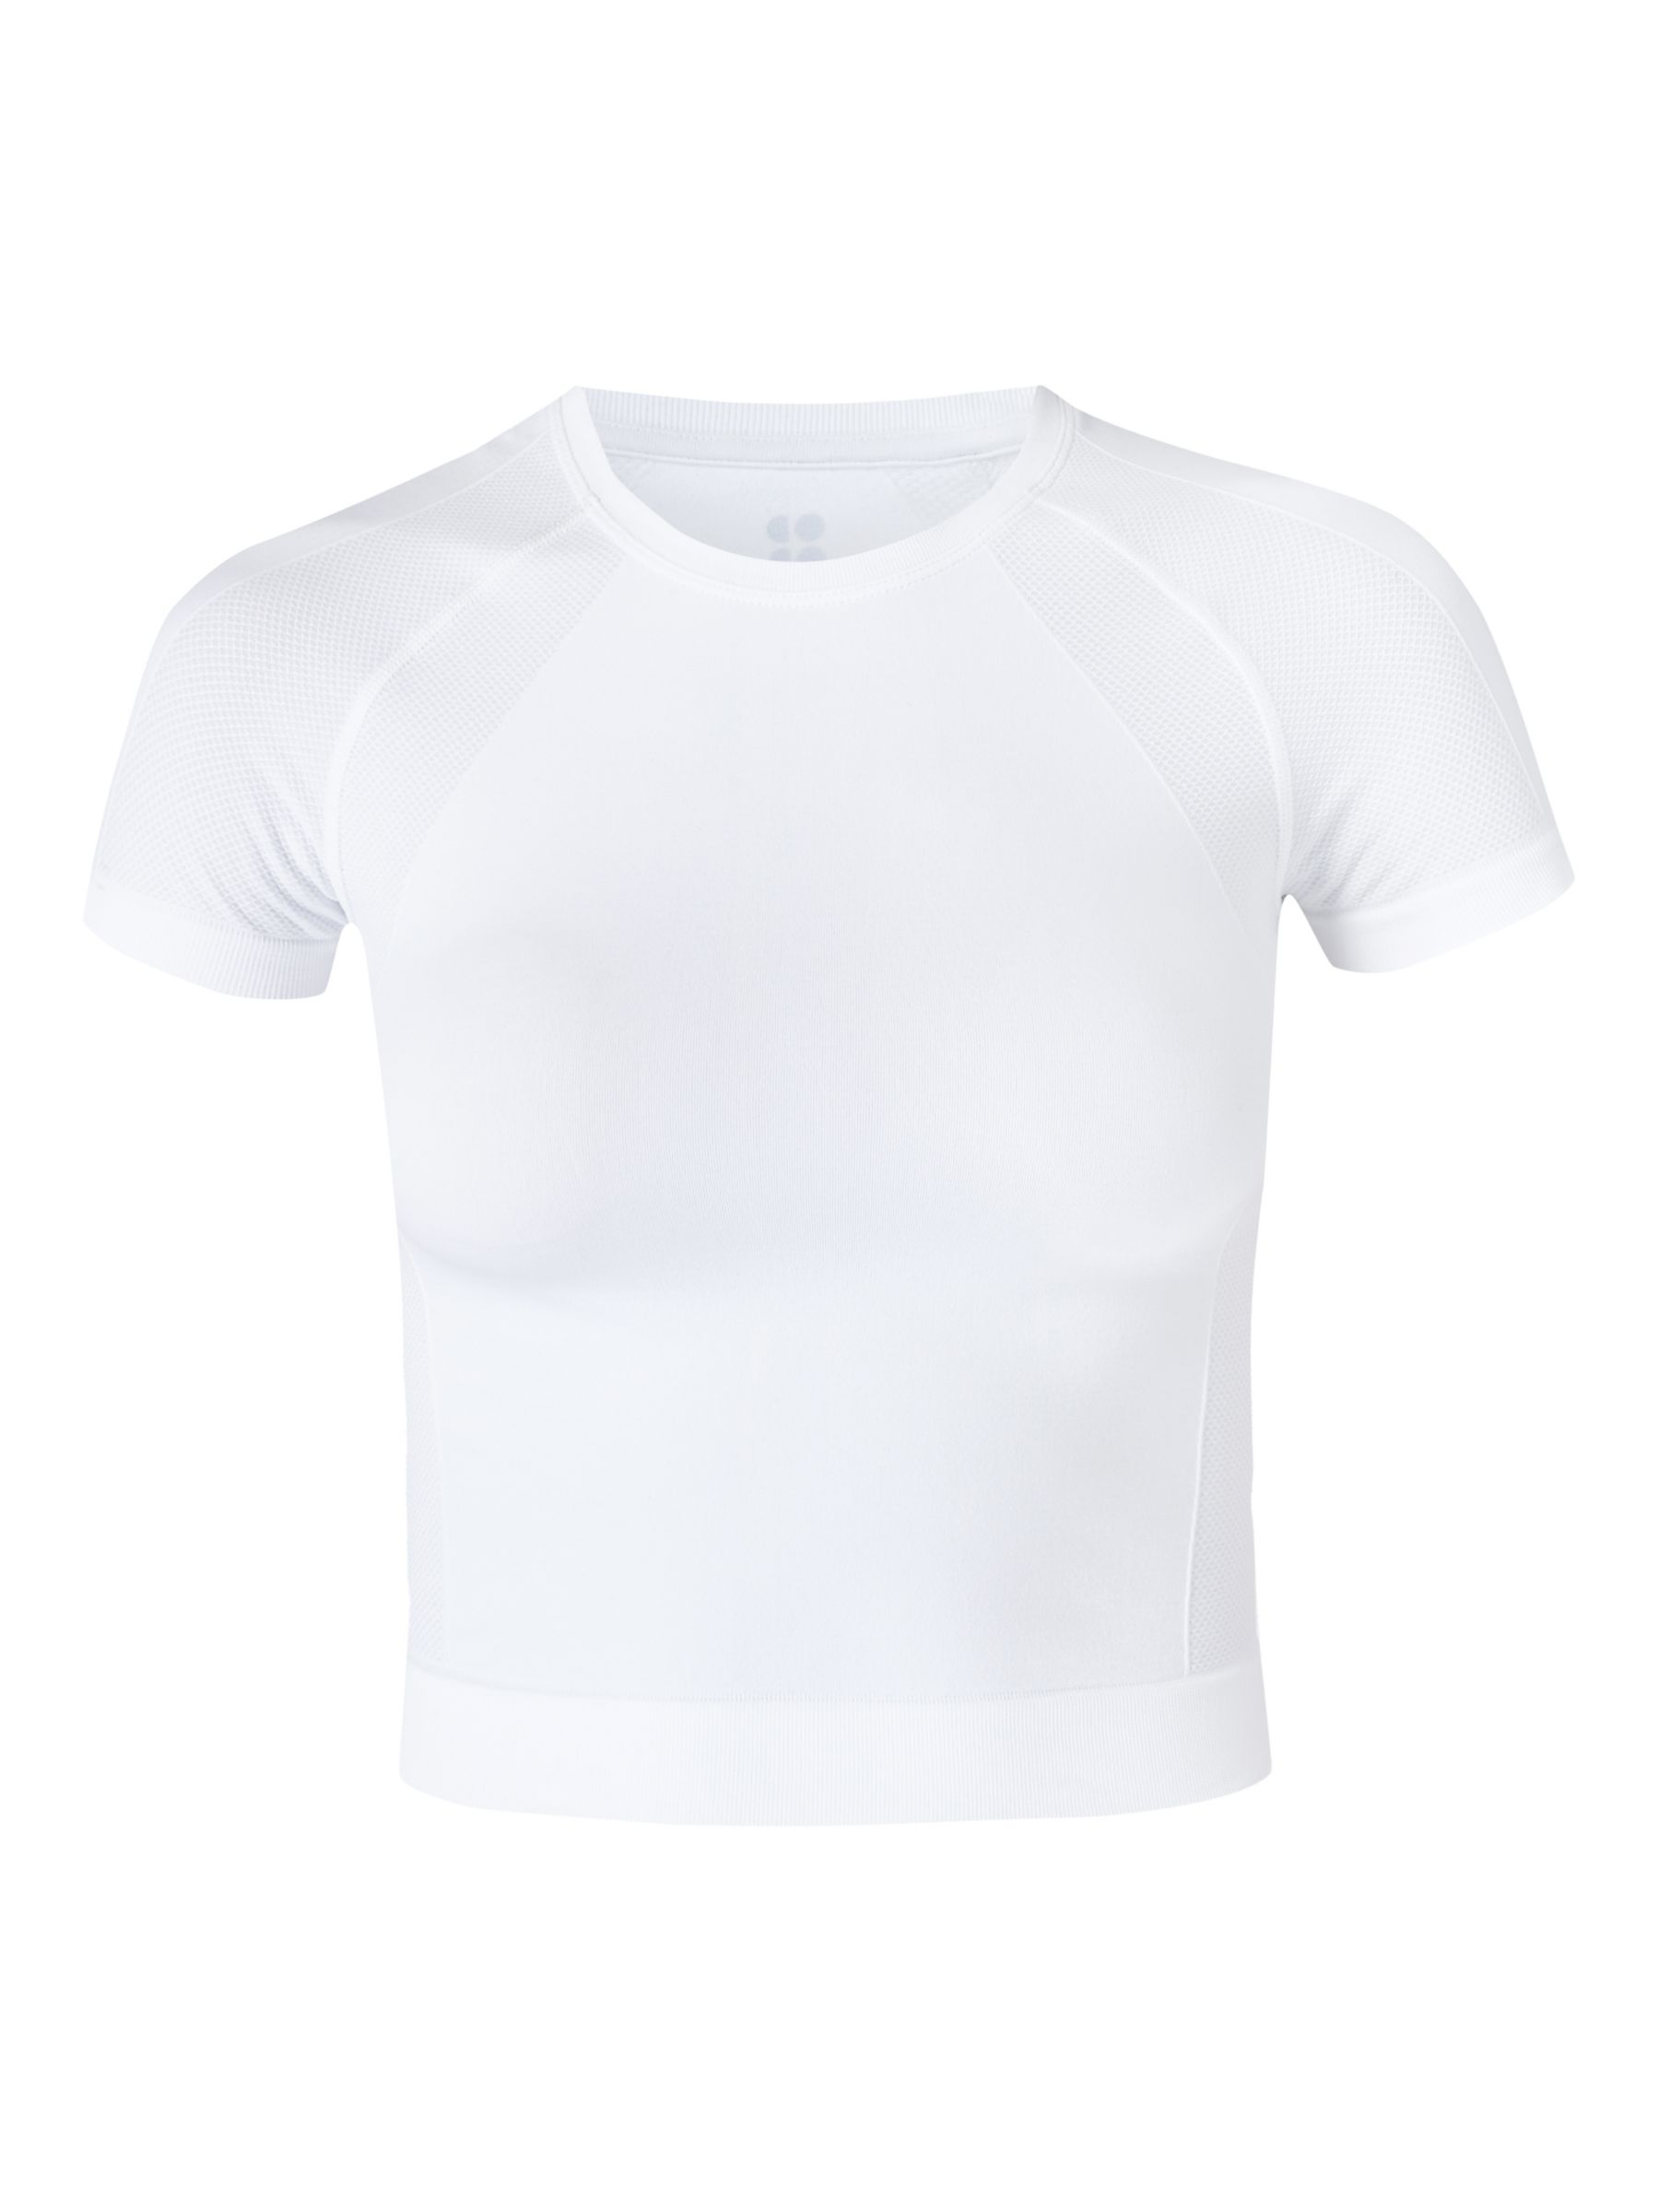 Sweaty Betty Athlete Crop Seamless Workout Top, White, XL